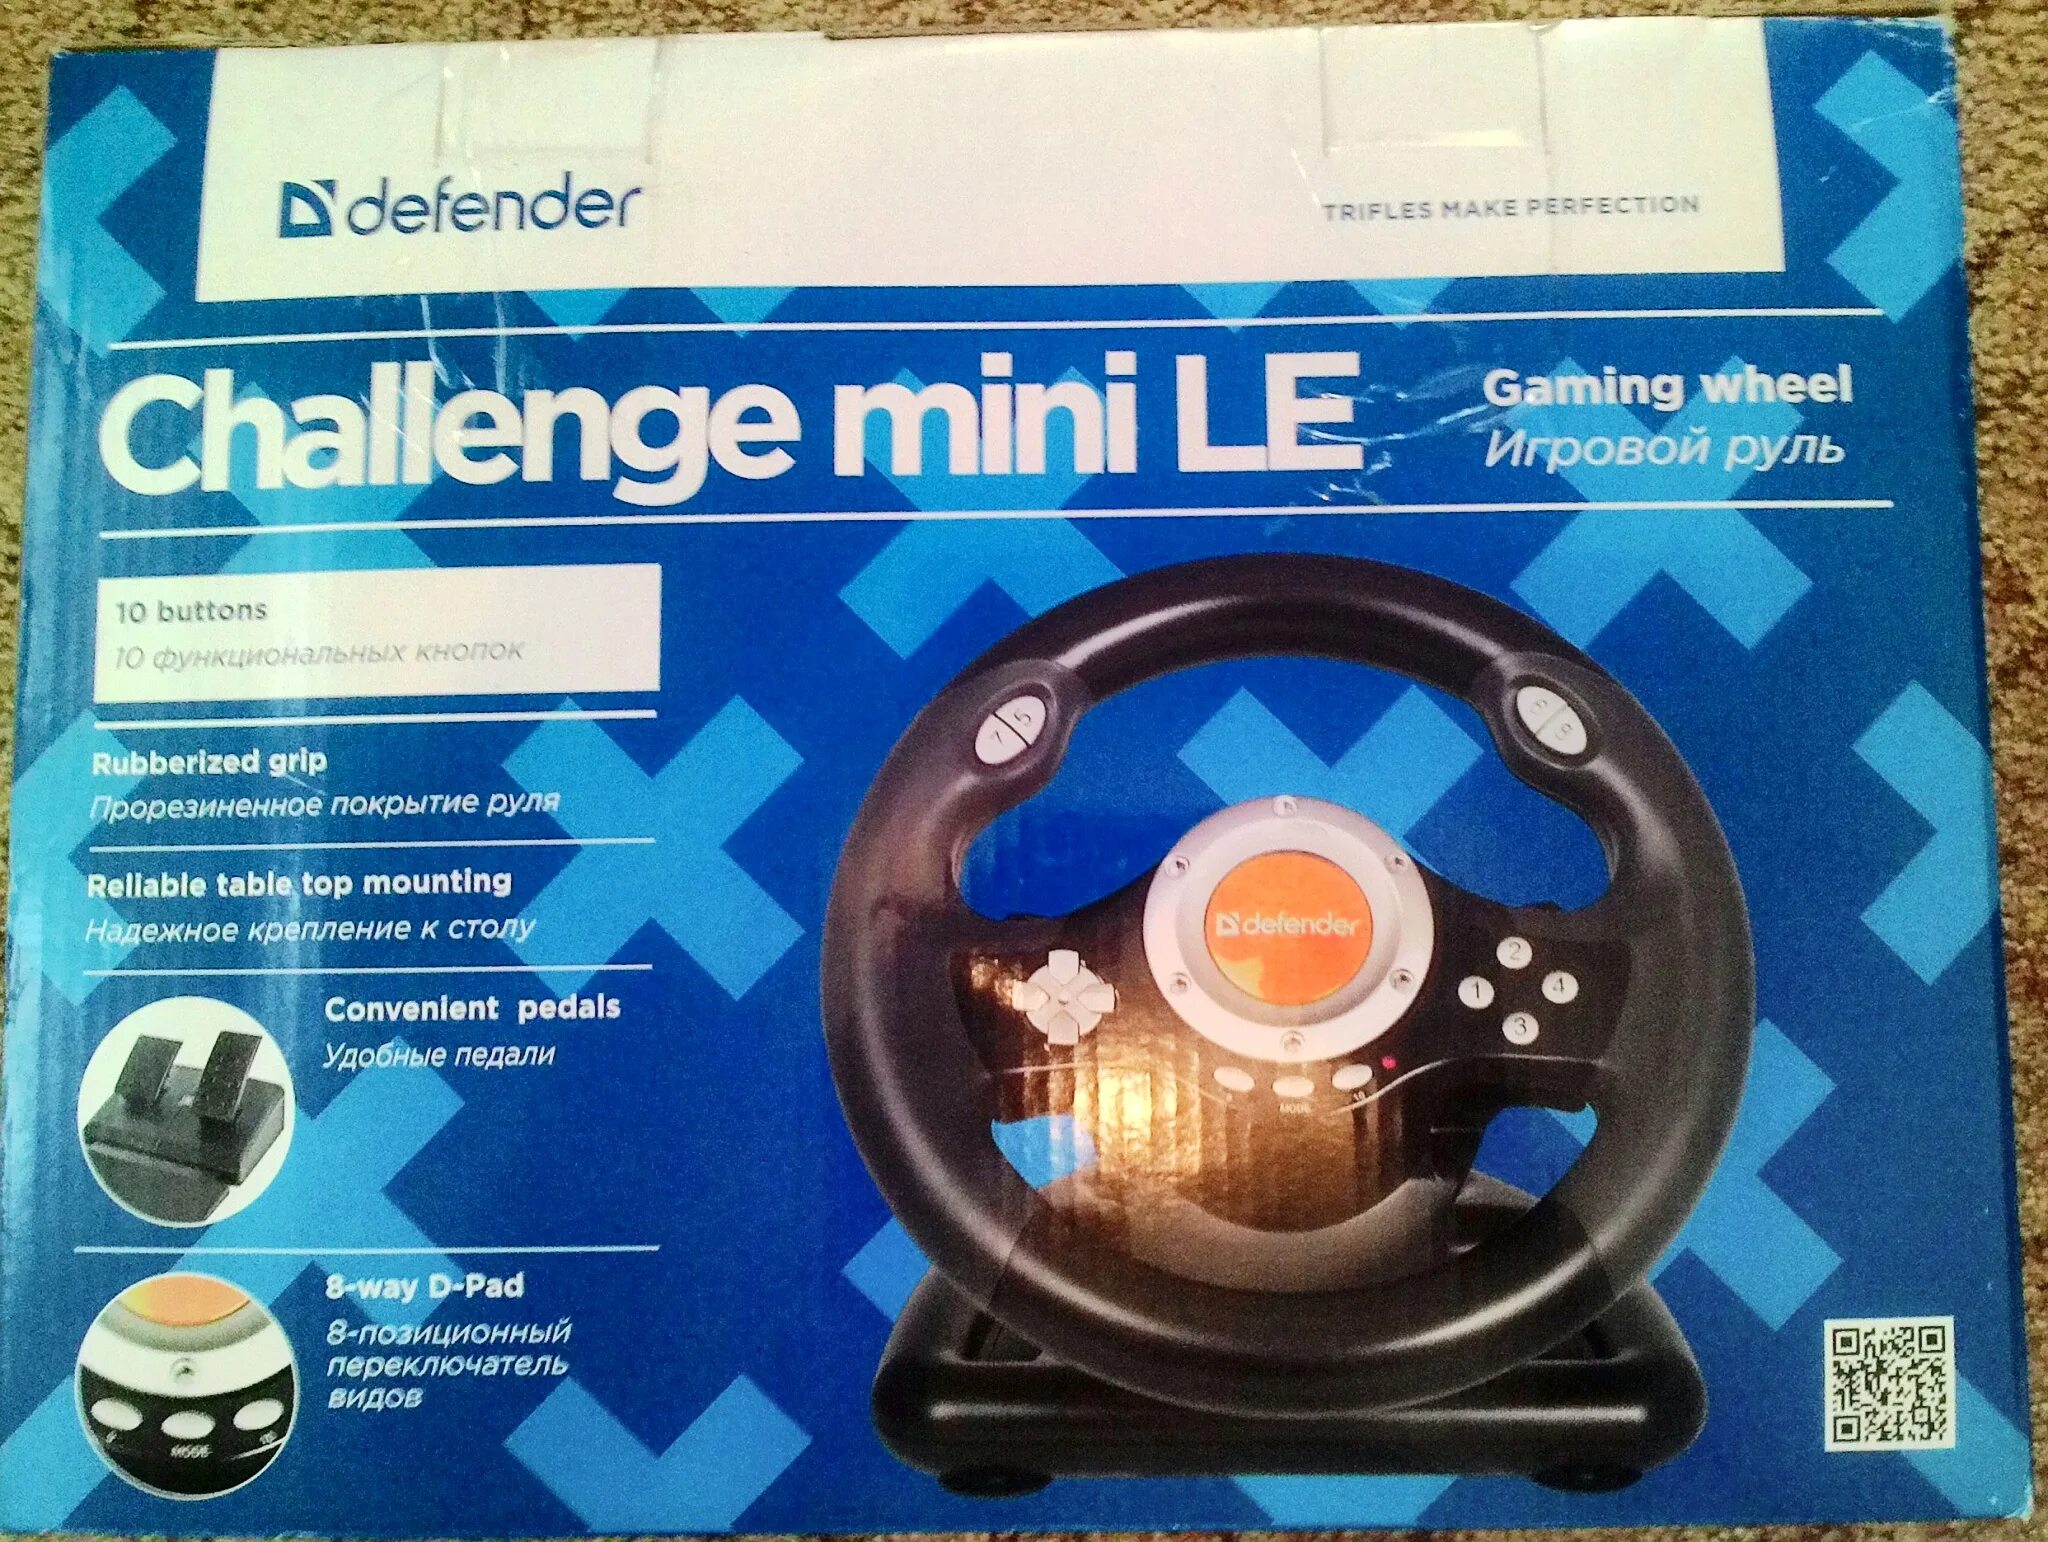 Как подключить руль defender. Defender Challenge Mini le 64351. Руль Дефендер Racing Wheel. Руль Defender Challenge Mini. Игровой руль Defender Challenge Mini le.